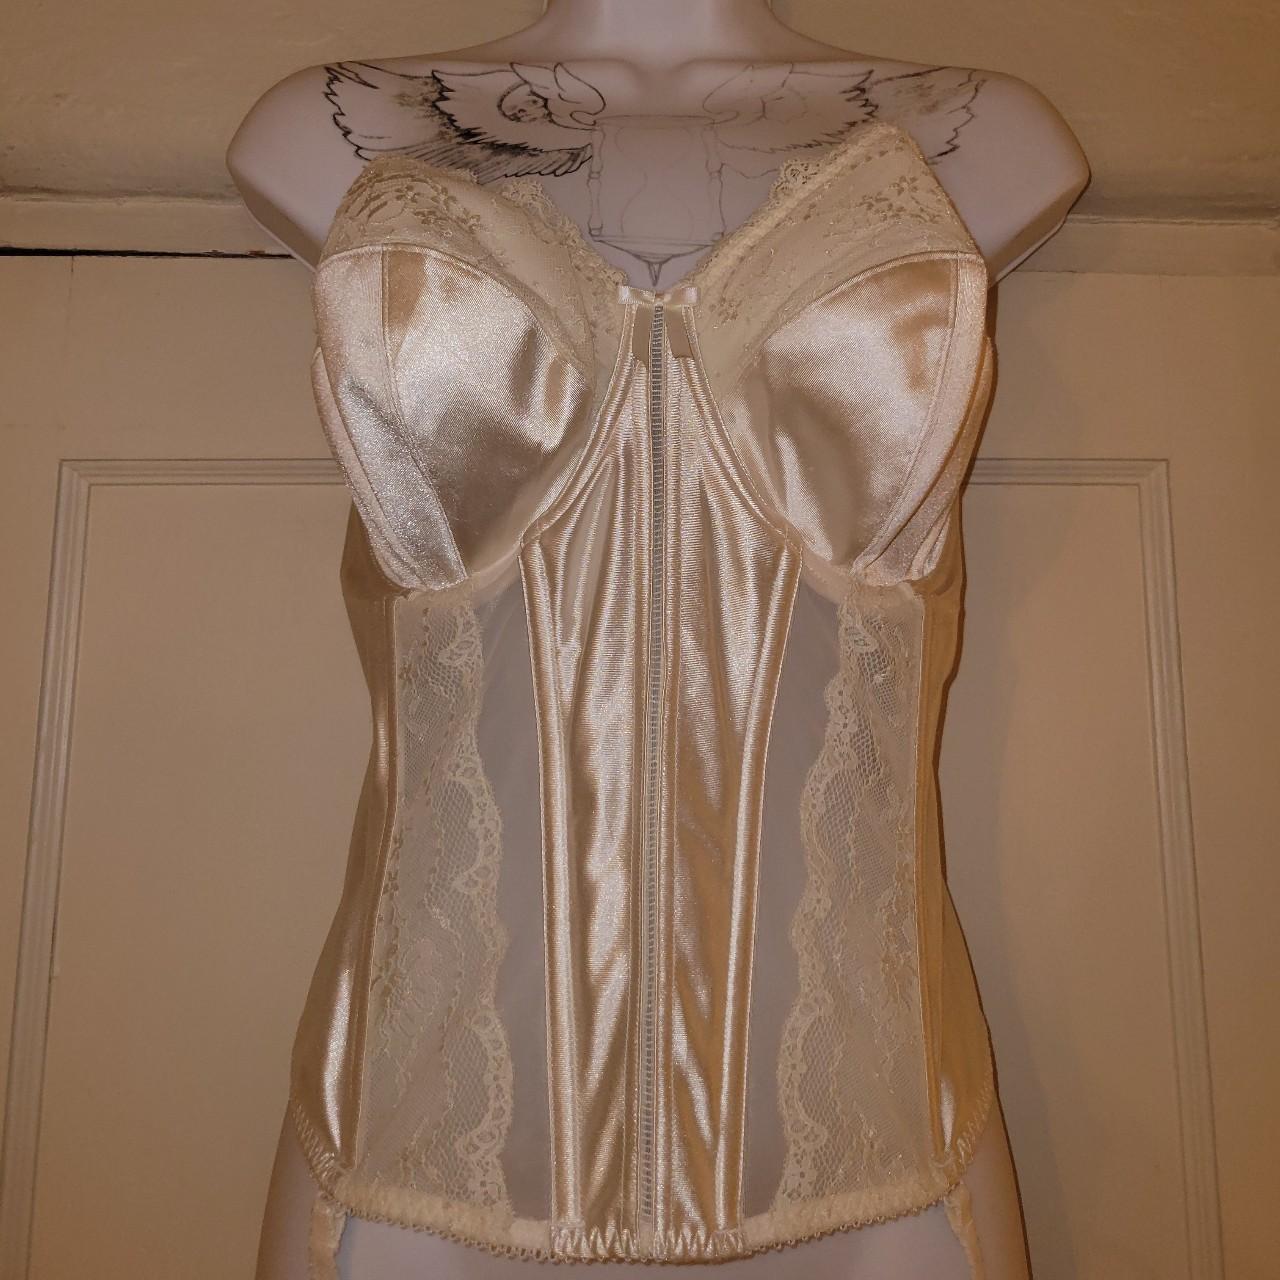 Product Image 1 - White lace corset💫

Amazing corset and